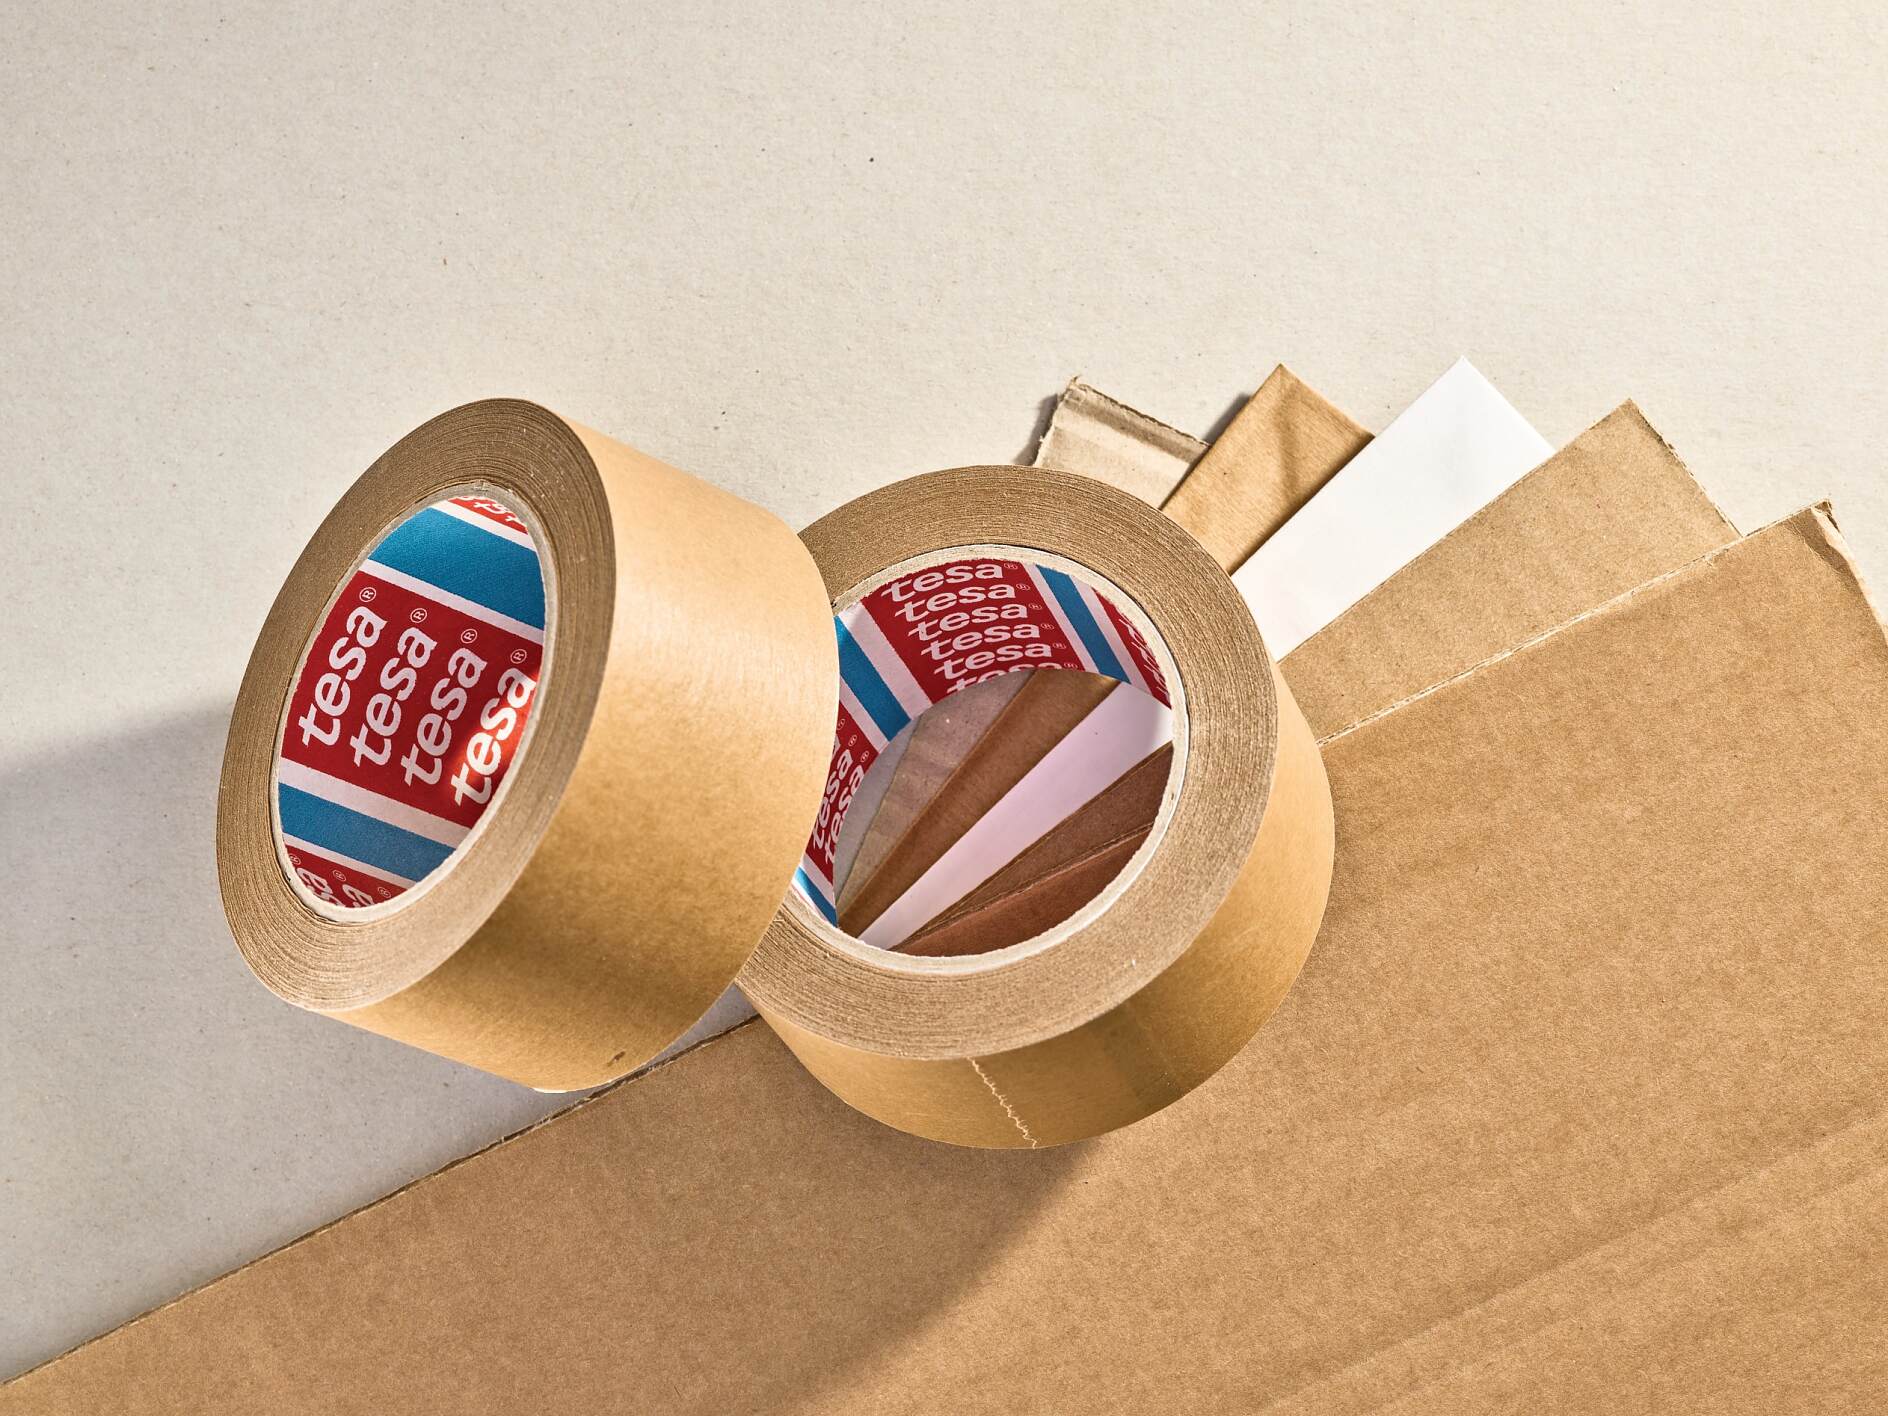 Packaging tape and carton sealing tape by tesa®